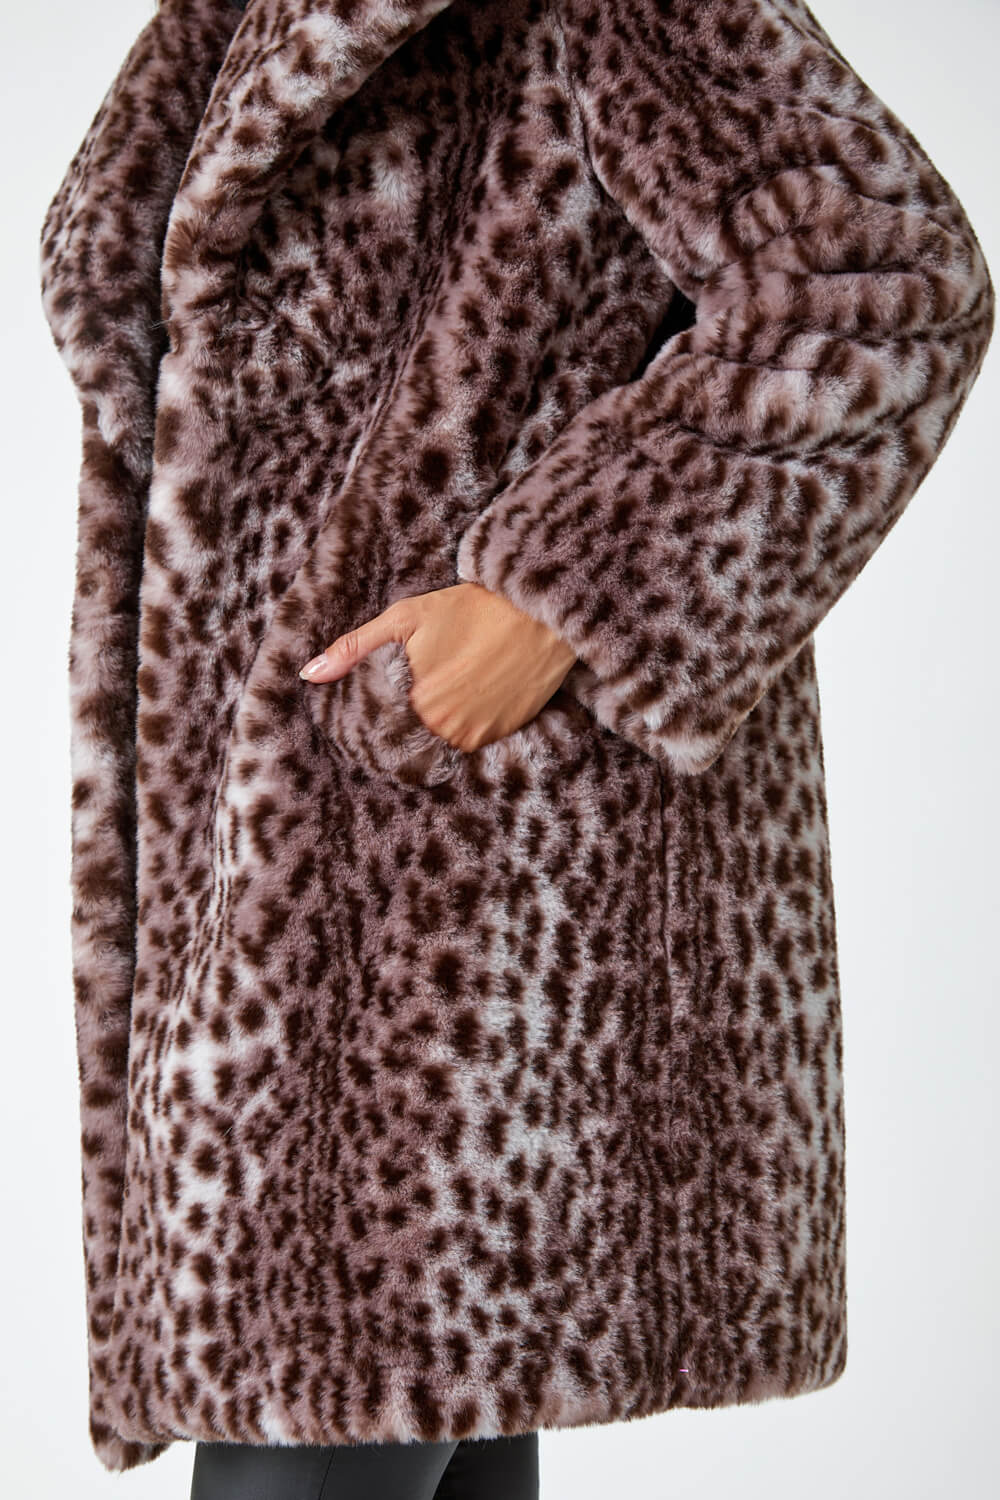 Taupe Premium Animal Print Faux Fur Coat, Image 4 of 5